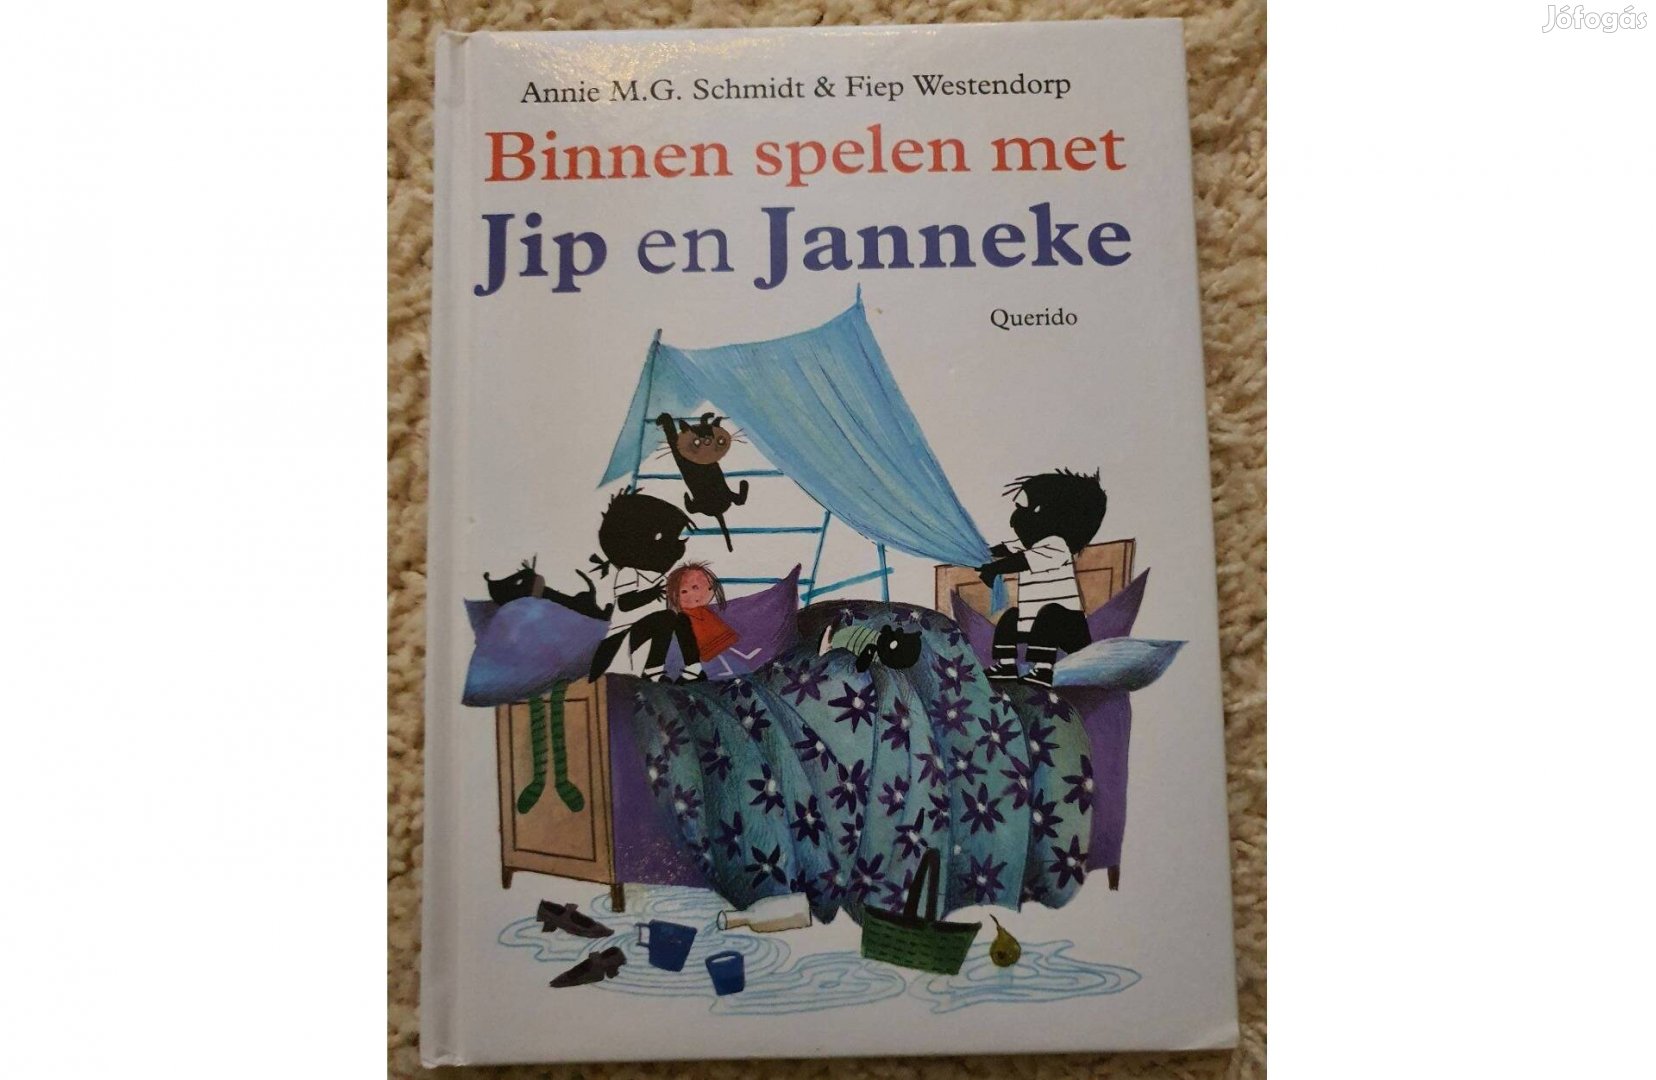 Annie M G Schmidt Binnen spelen met Jip en Janneke, holland